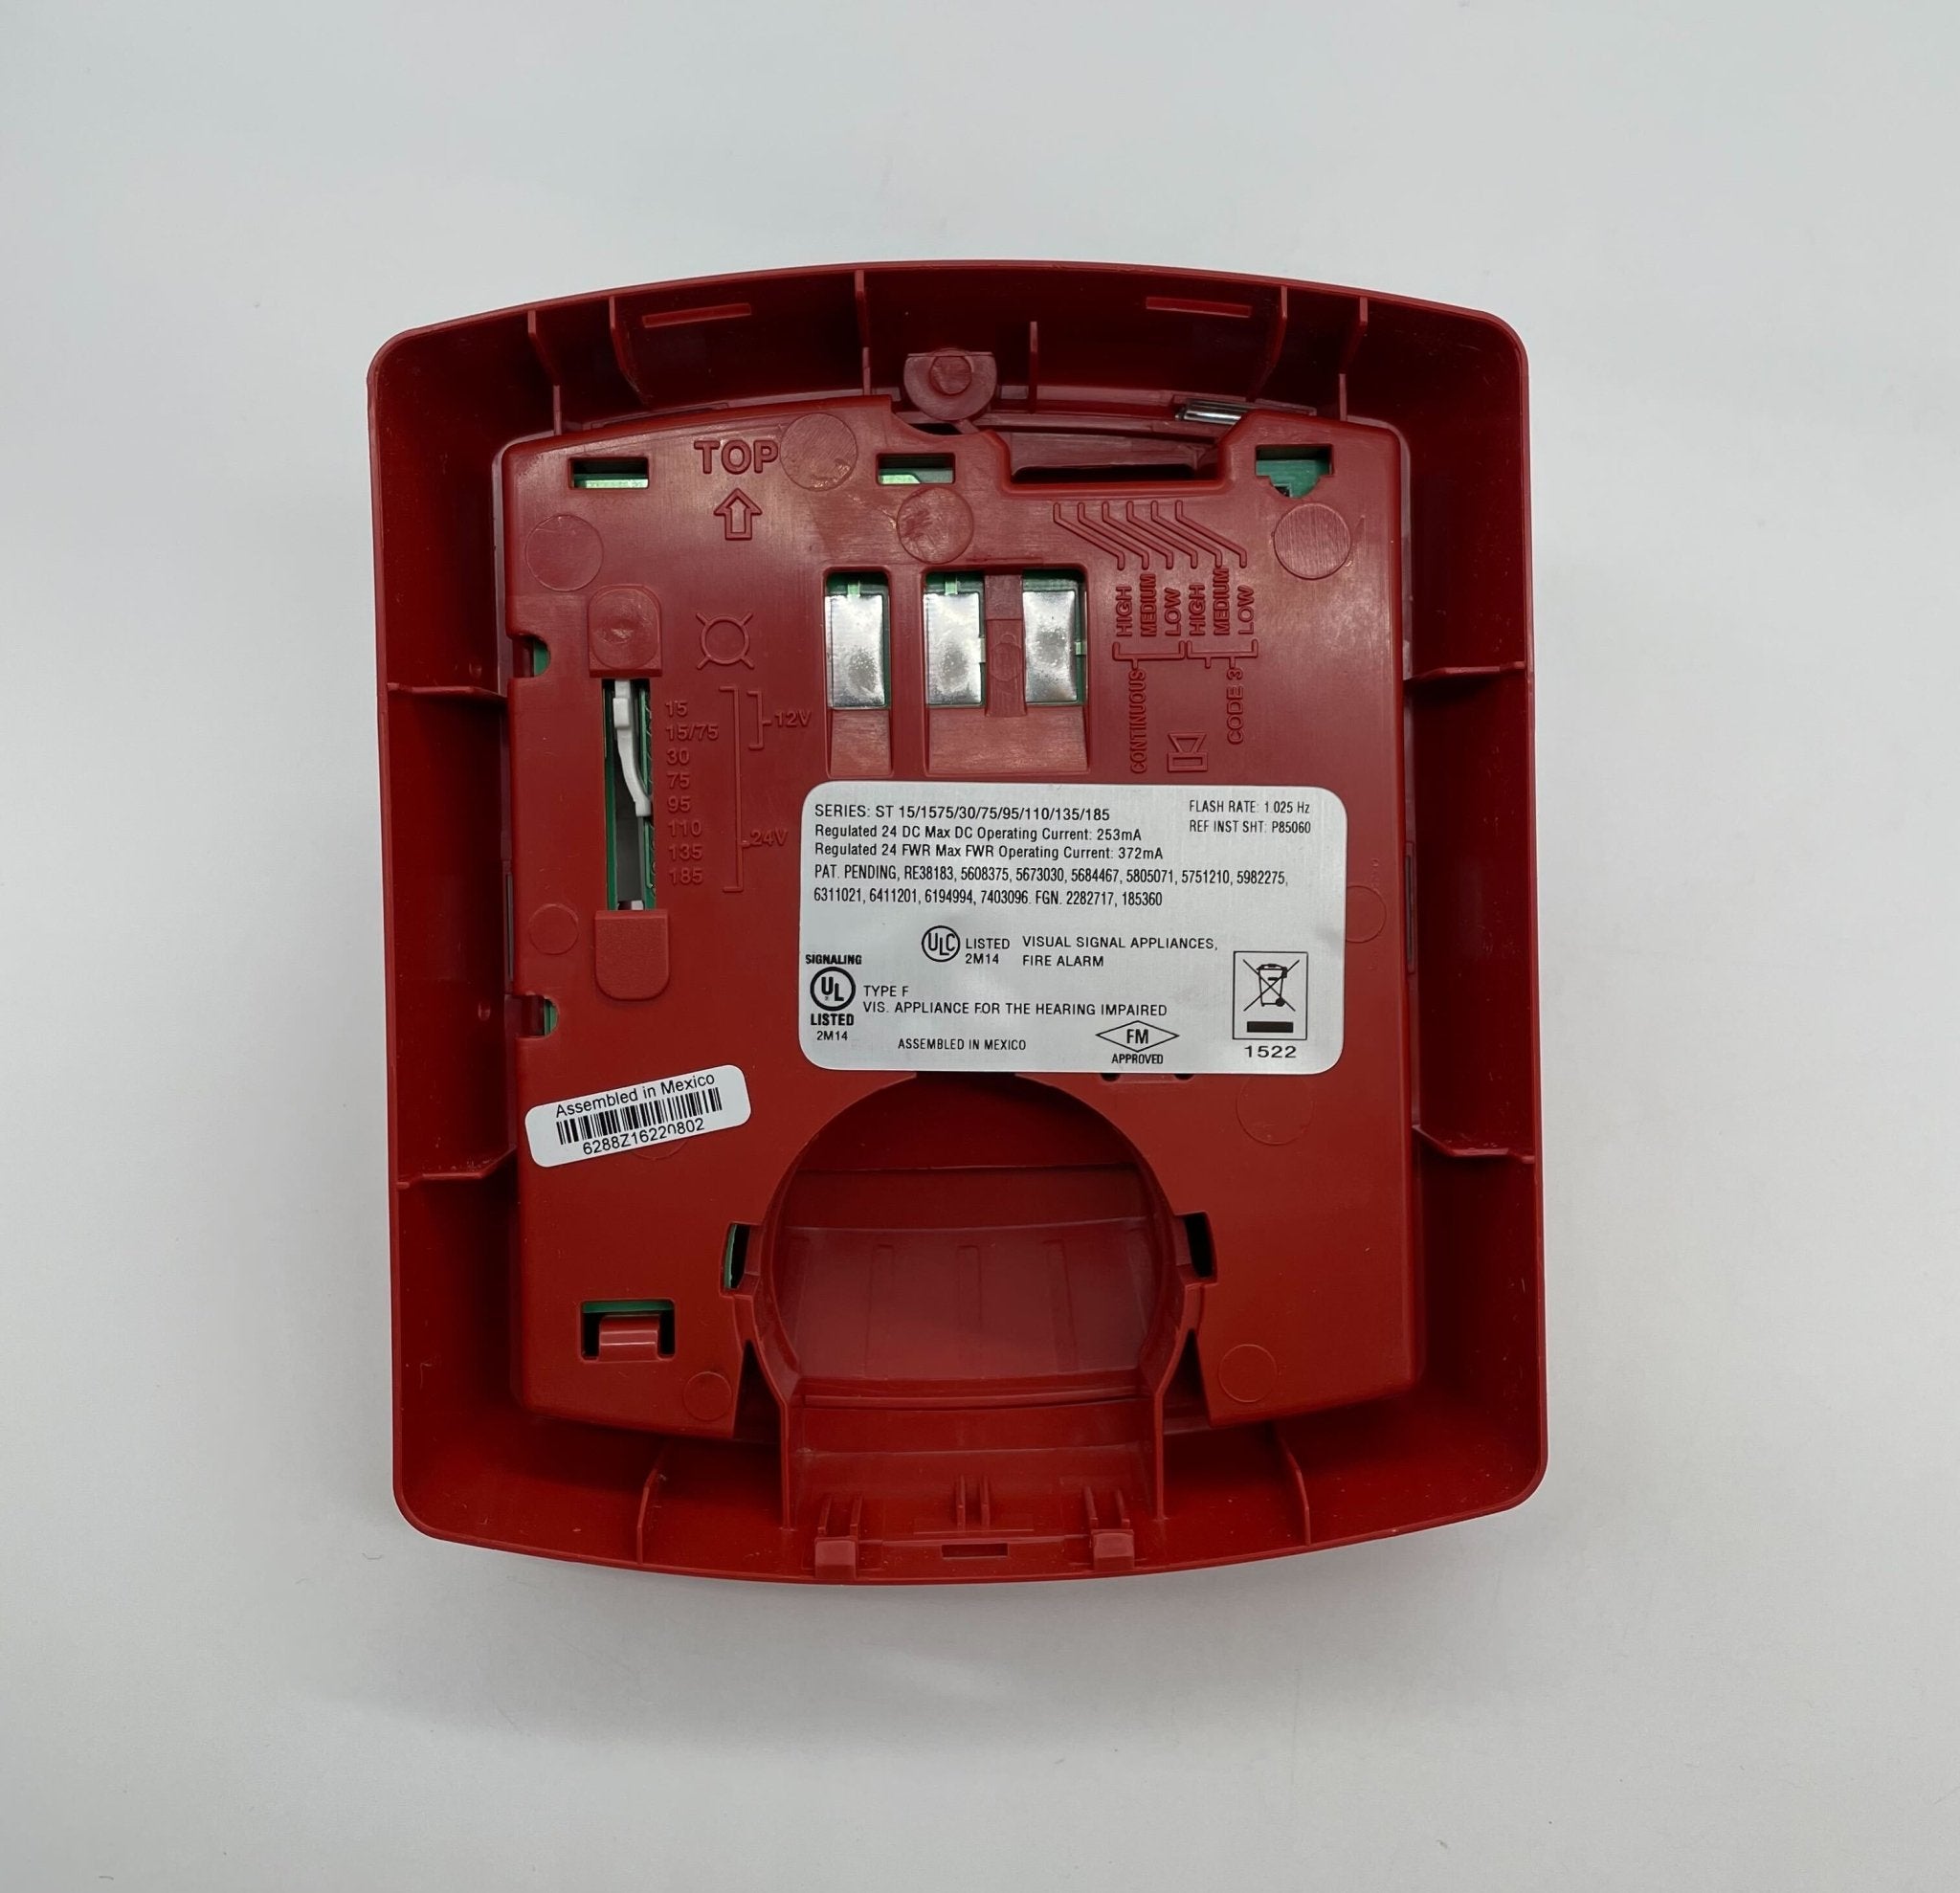 Wheelock STR - The Fire Alarm Supplier